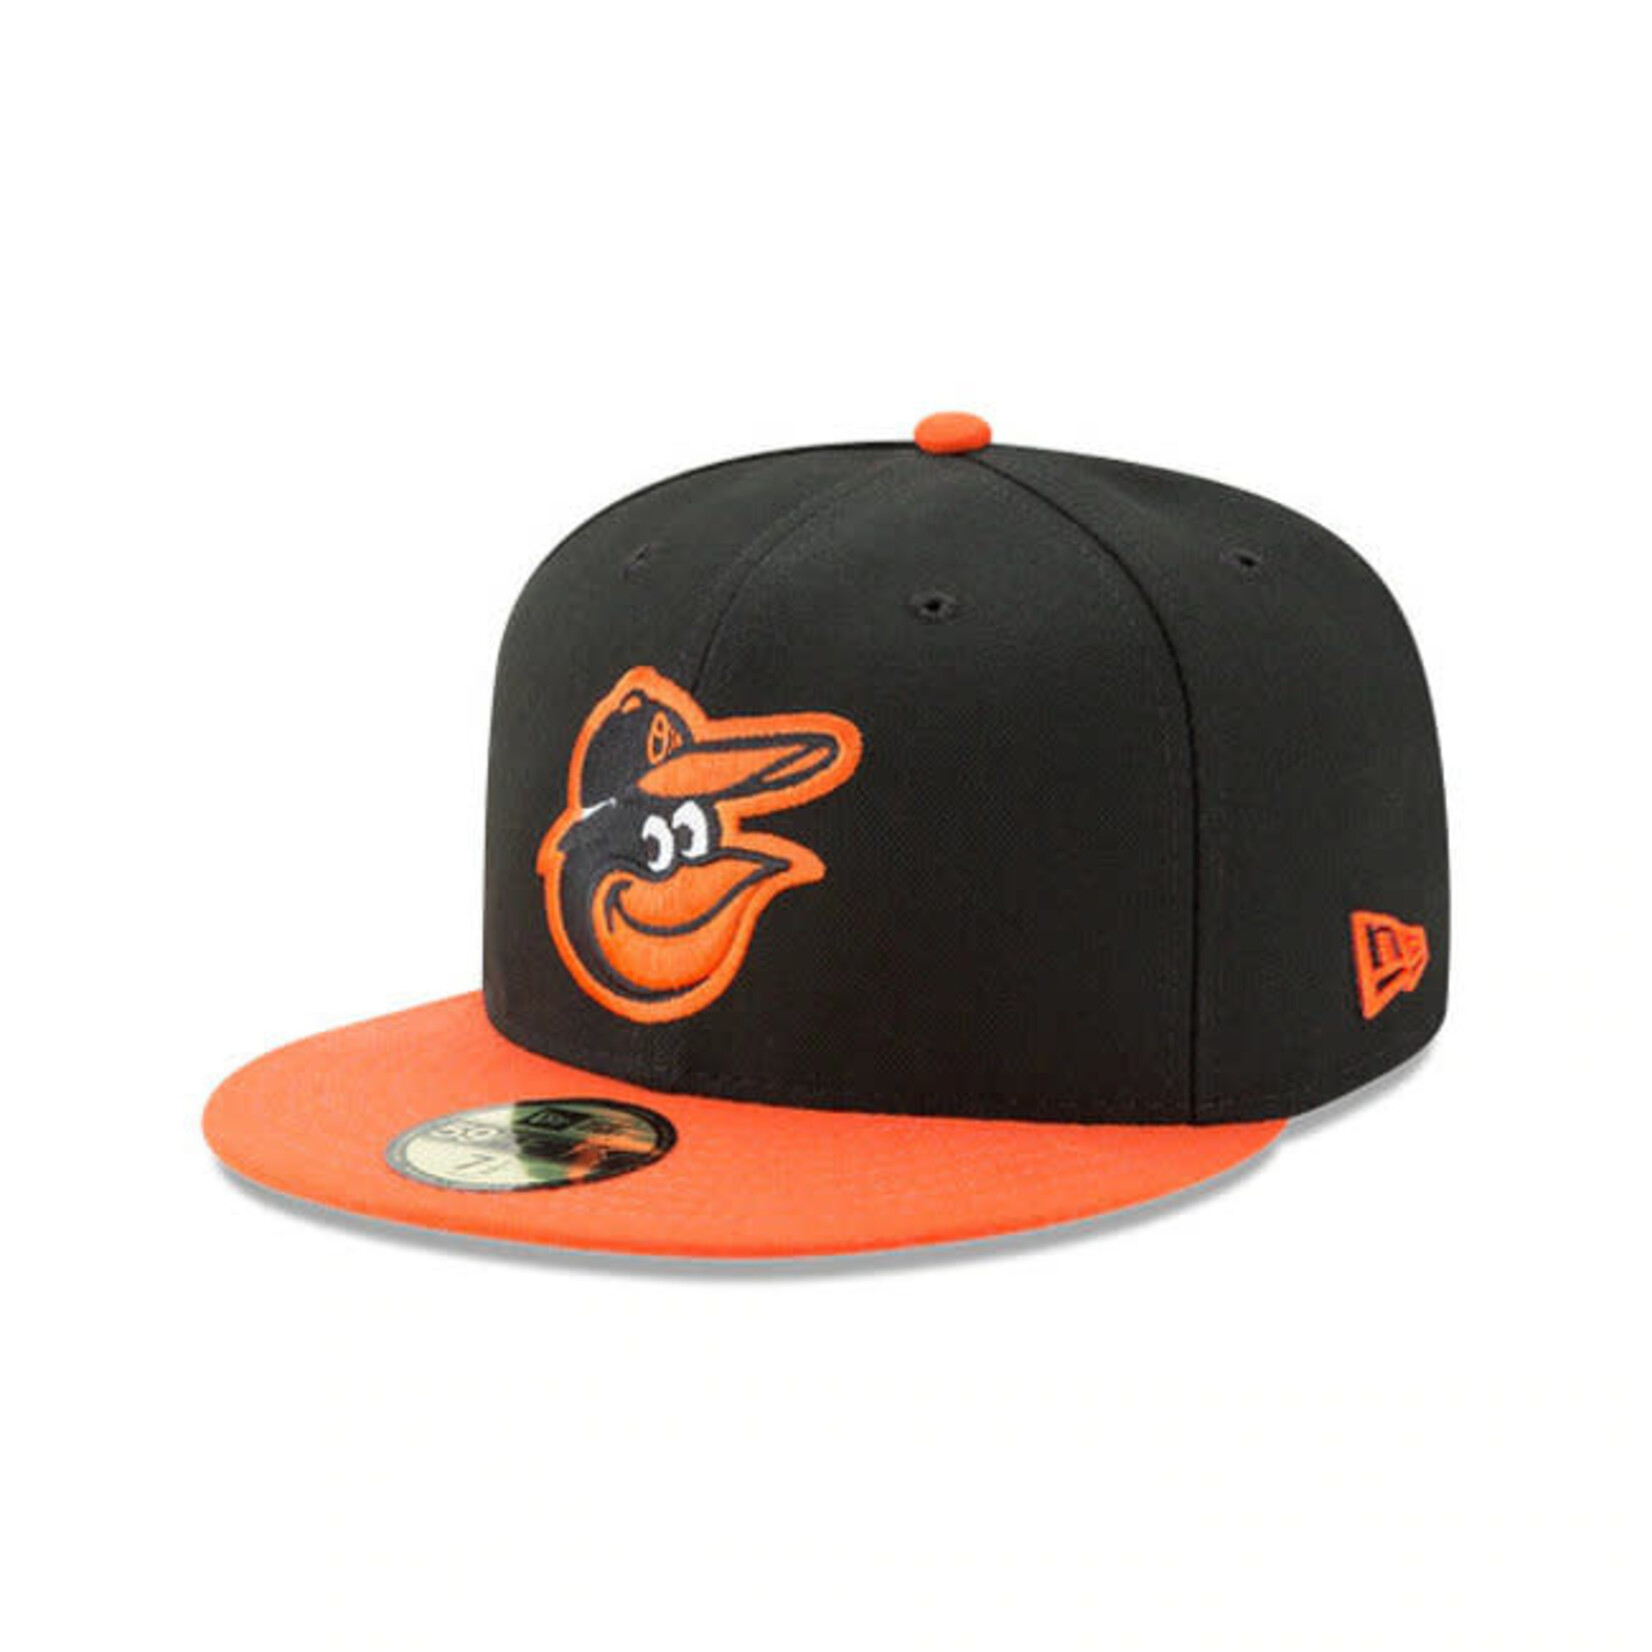 New Era New Era Hat, 5950 On-Field AC, MLB, Baltimore Orioles, Road